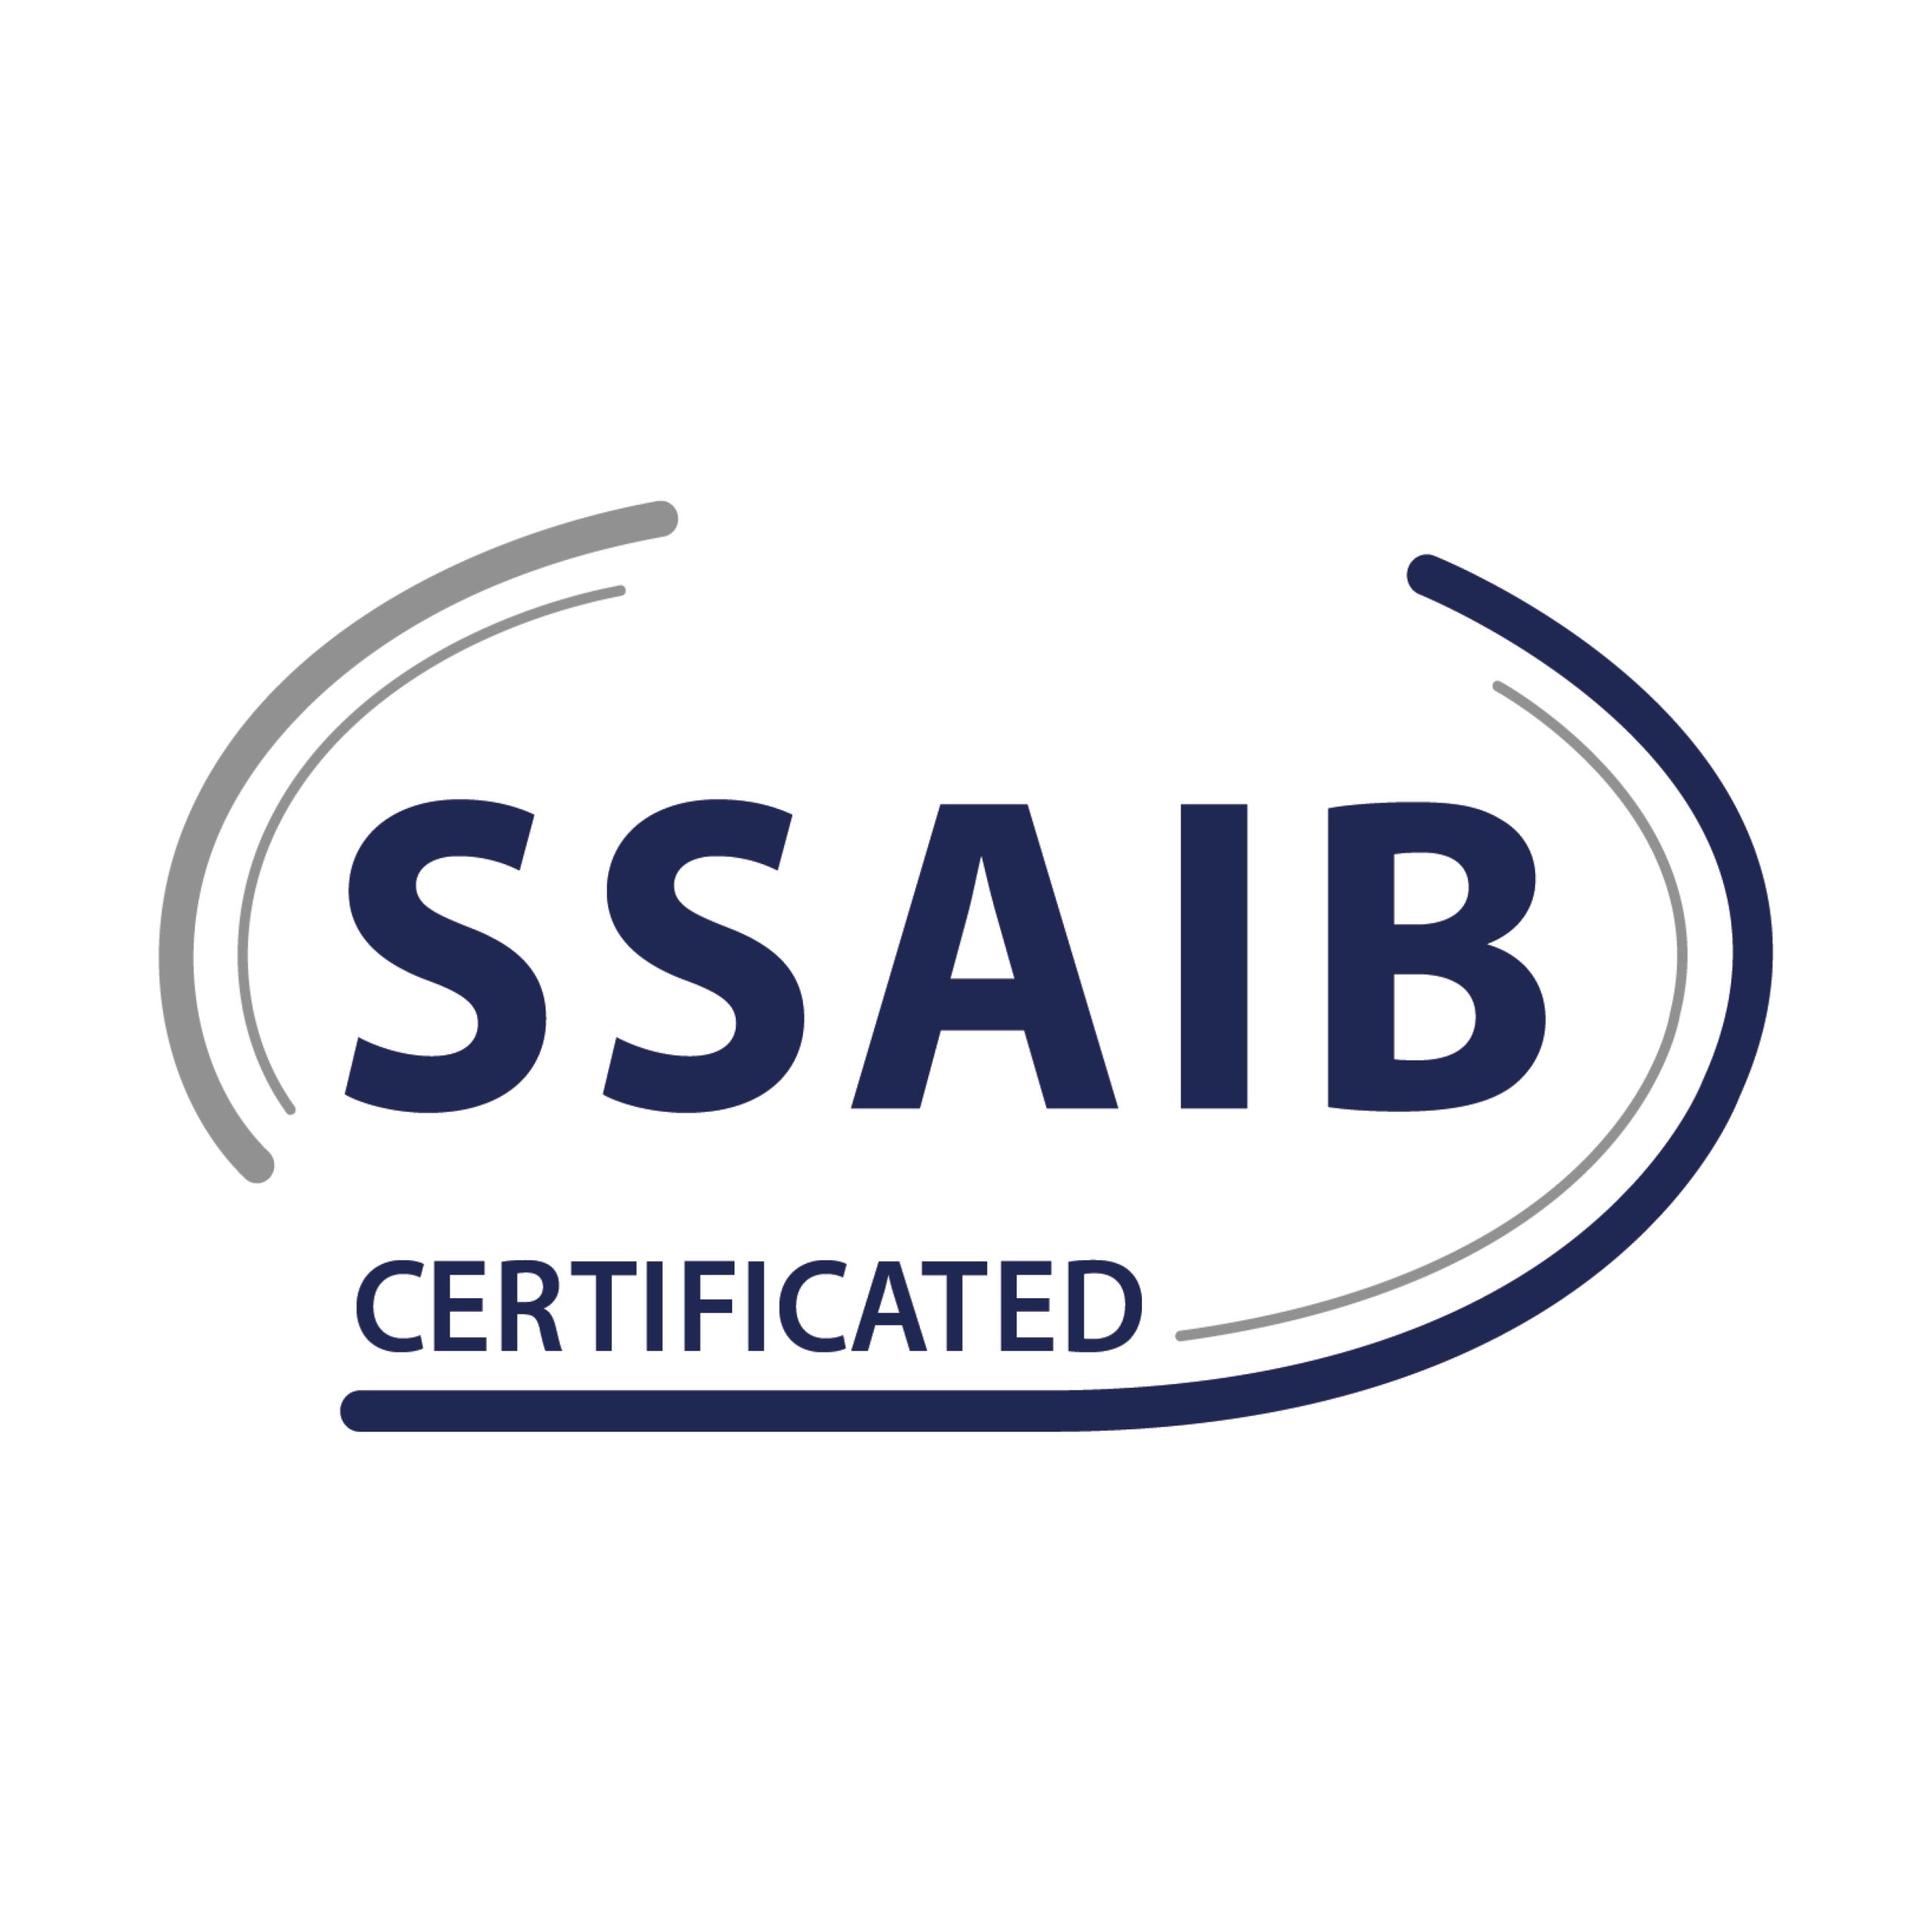 certified ssaib company